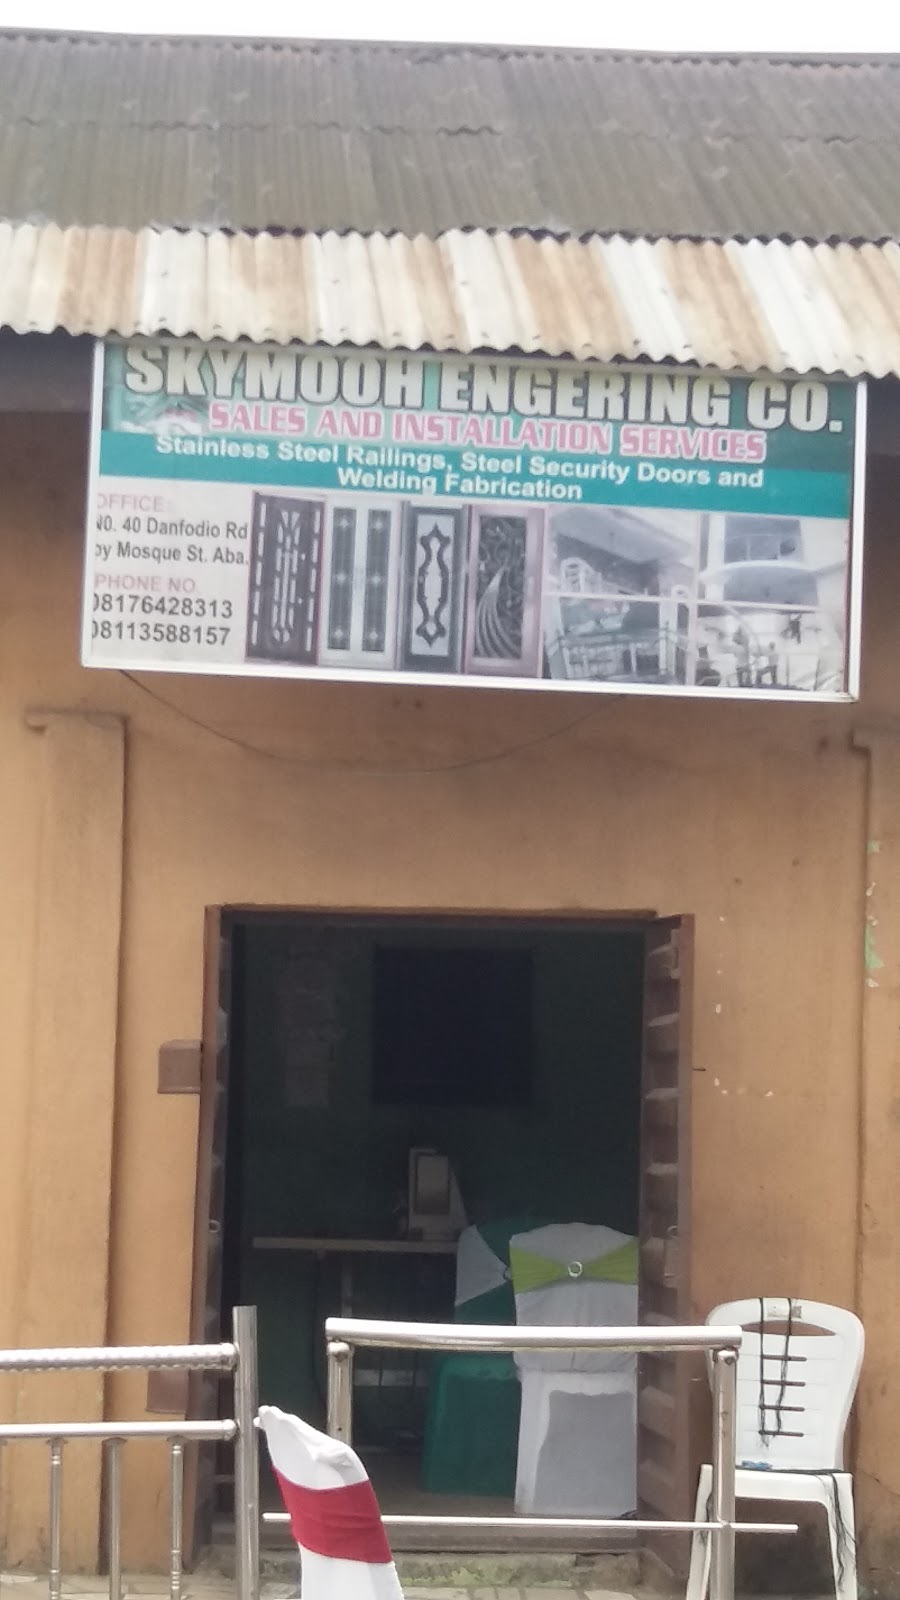 Skymooh Engering Co.